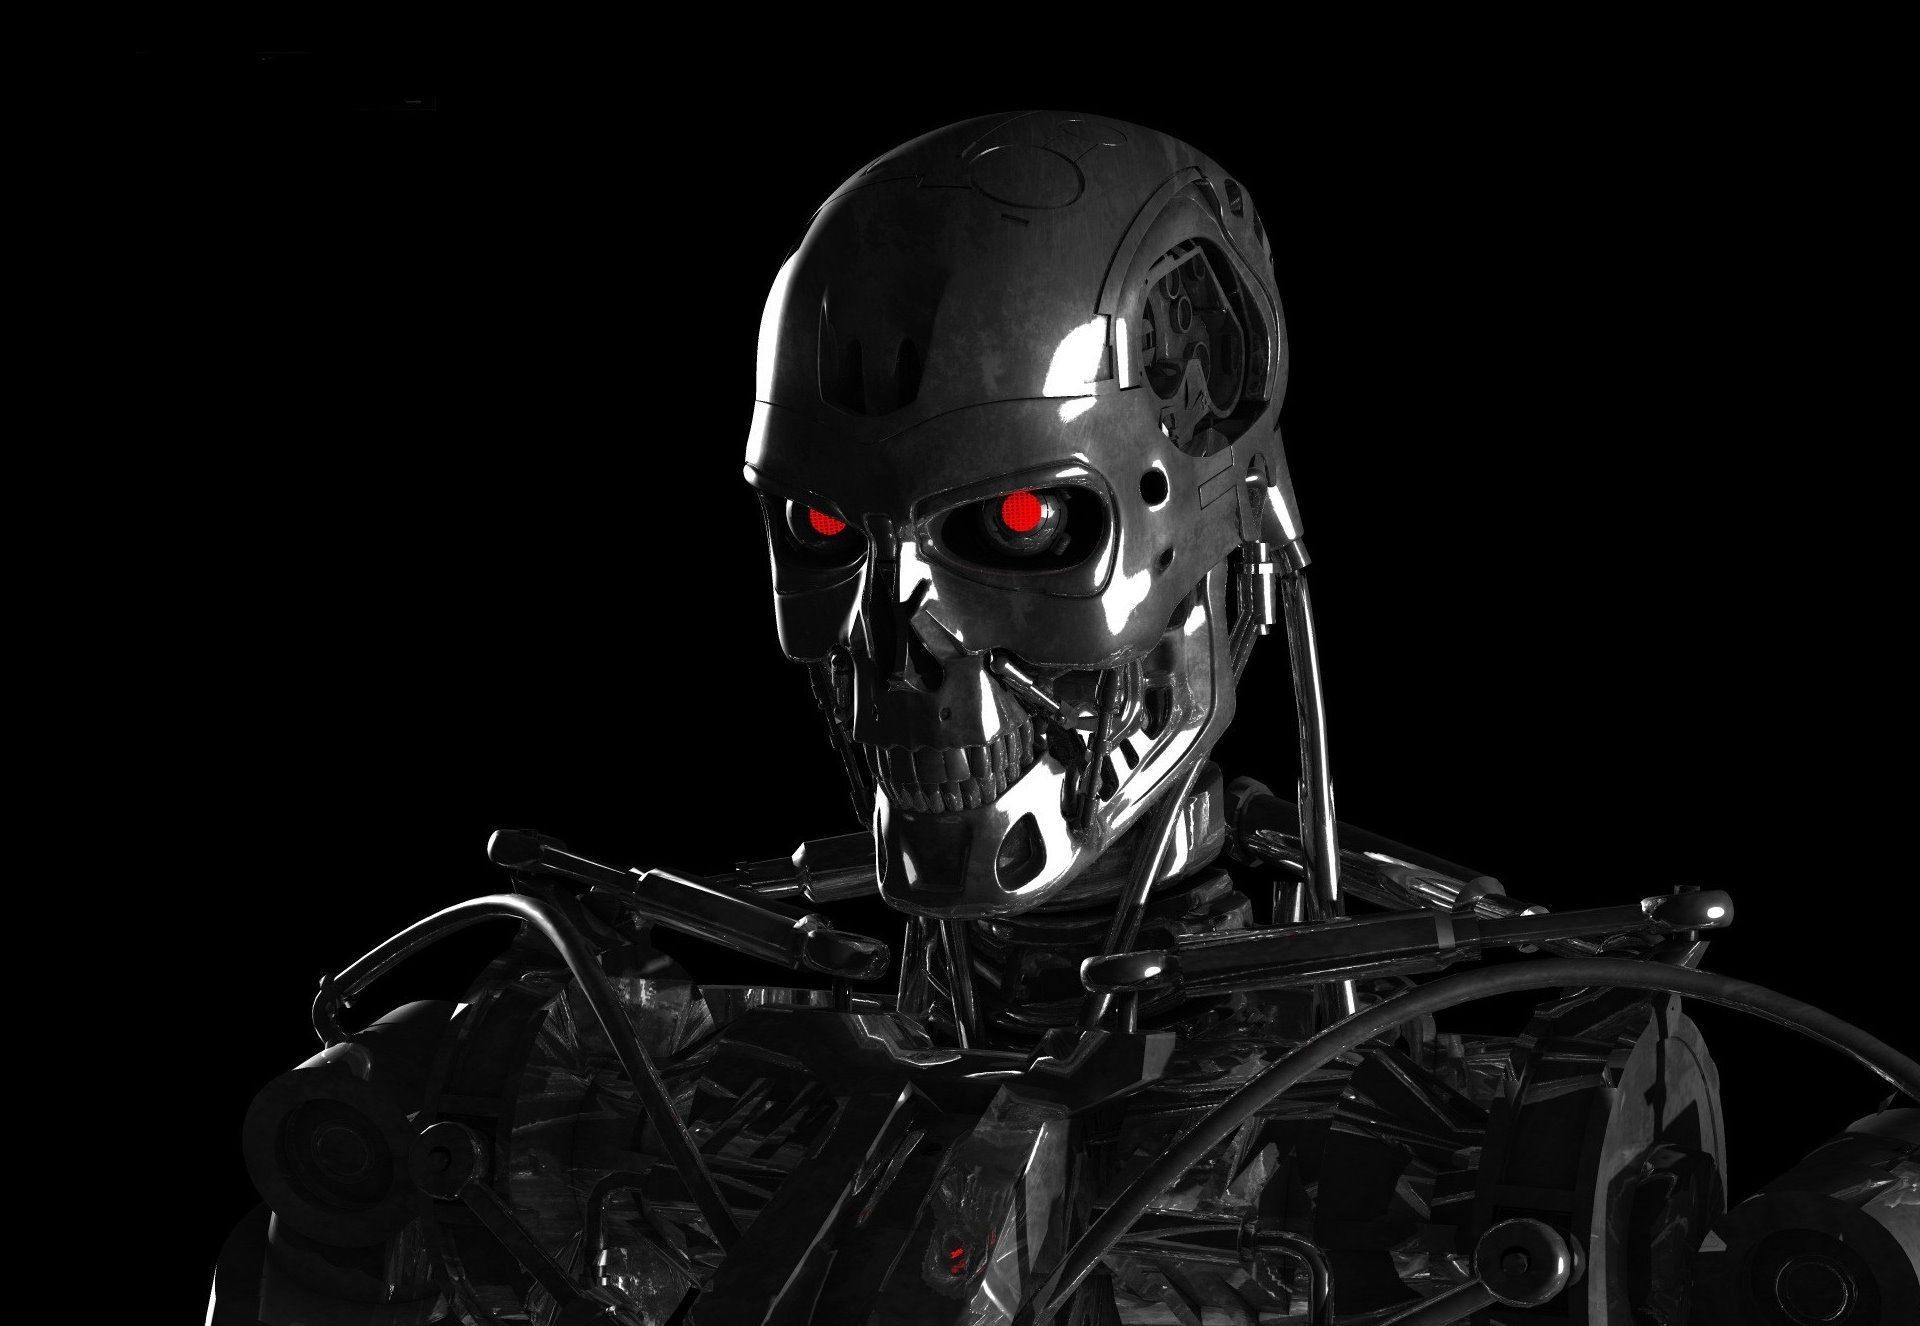 fighters bike science frame skull robot anatomy dark futuristic android vehicle cyborg helmet scary